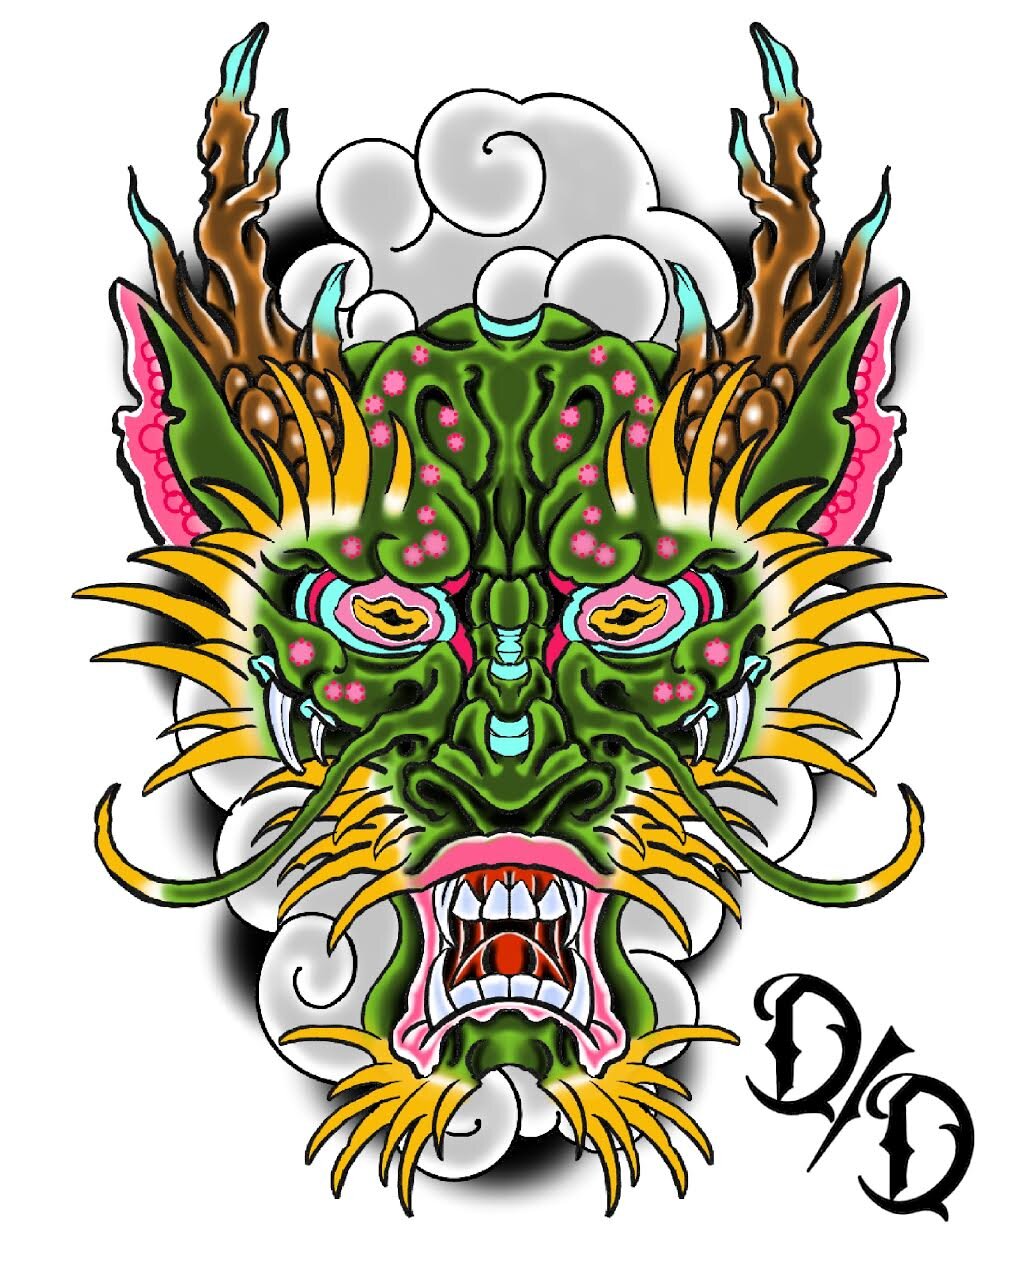  Jeff Sotace- Corona Dragon  8x10 digital illustration  Jeff.sotace@gmail.com  $25 prints available 